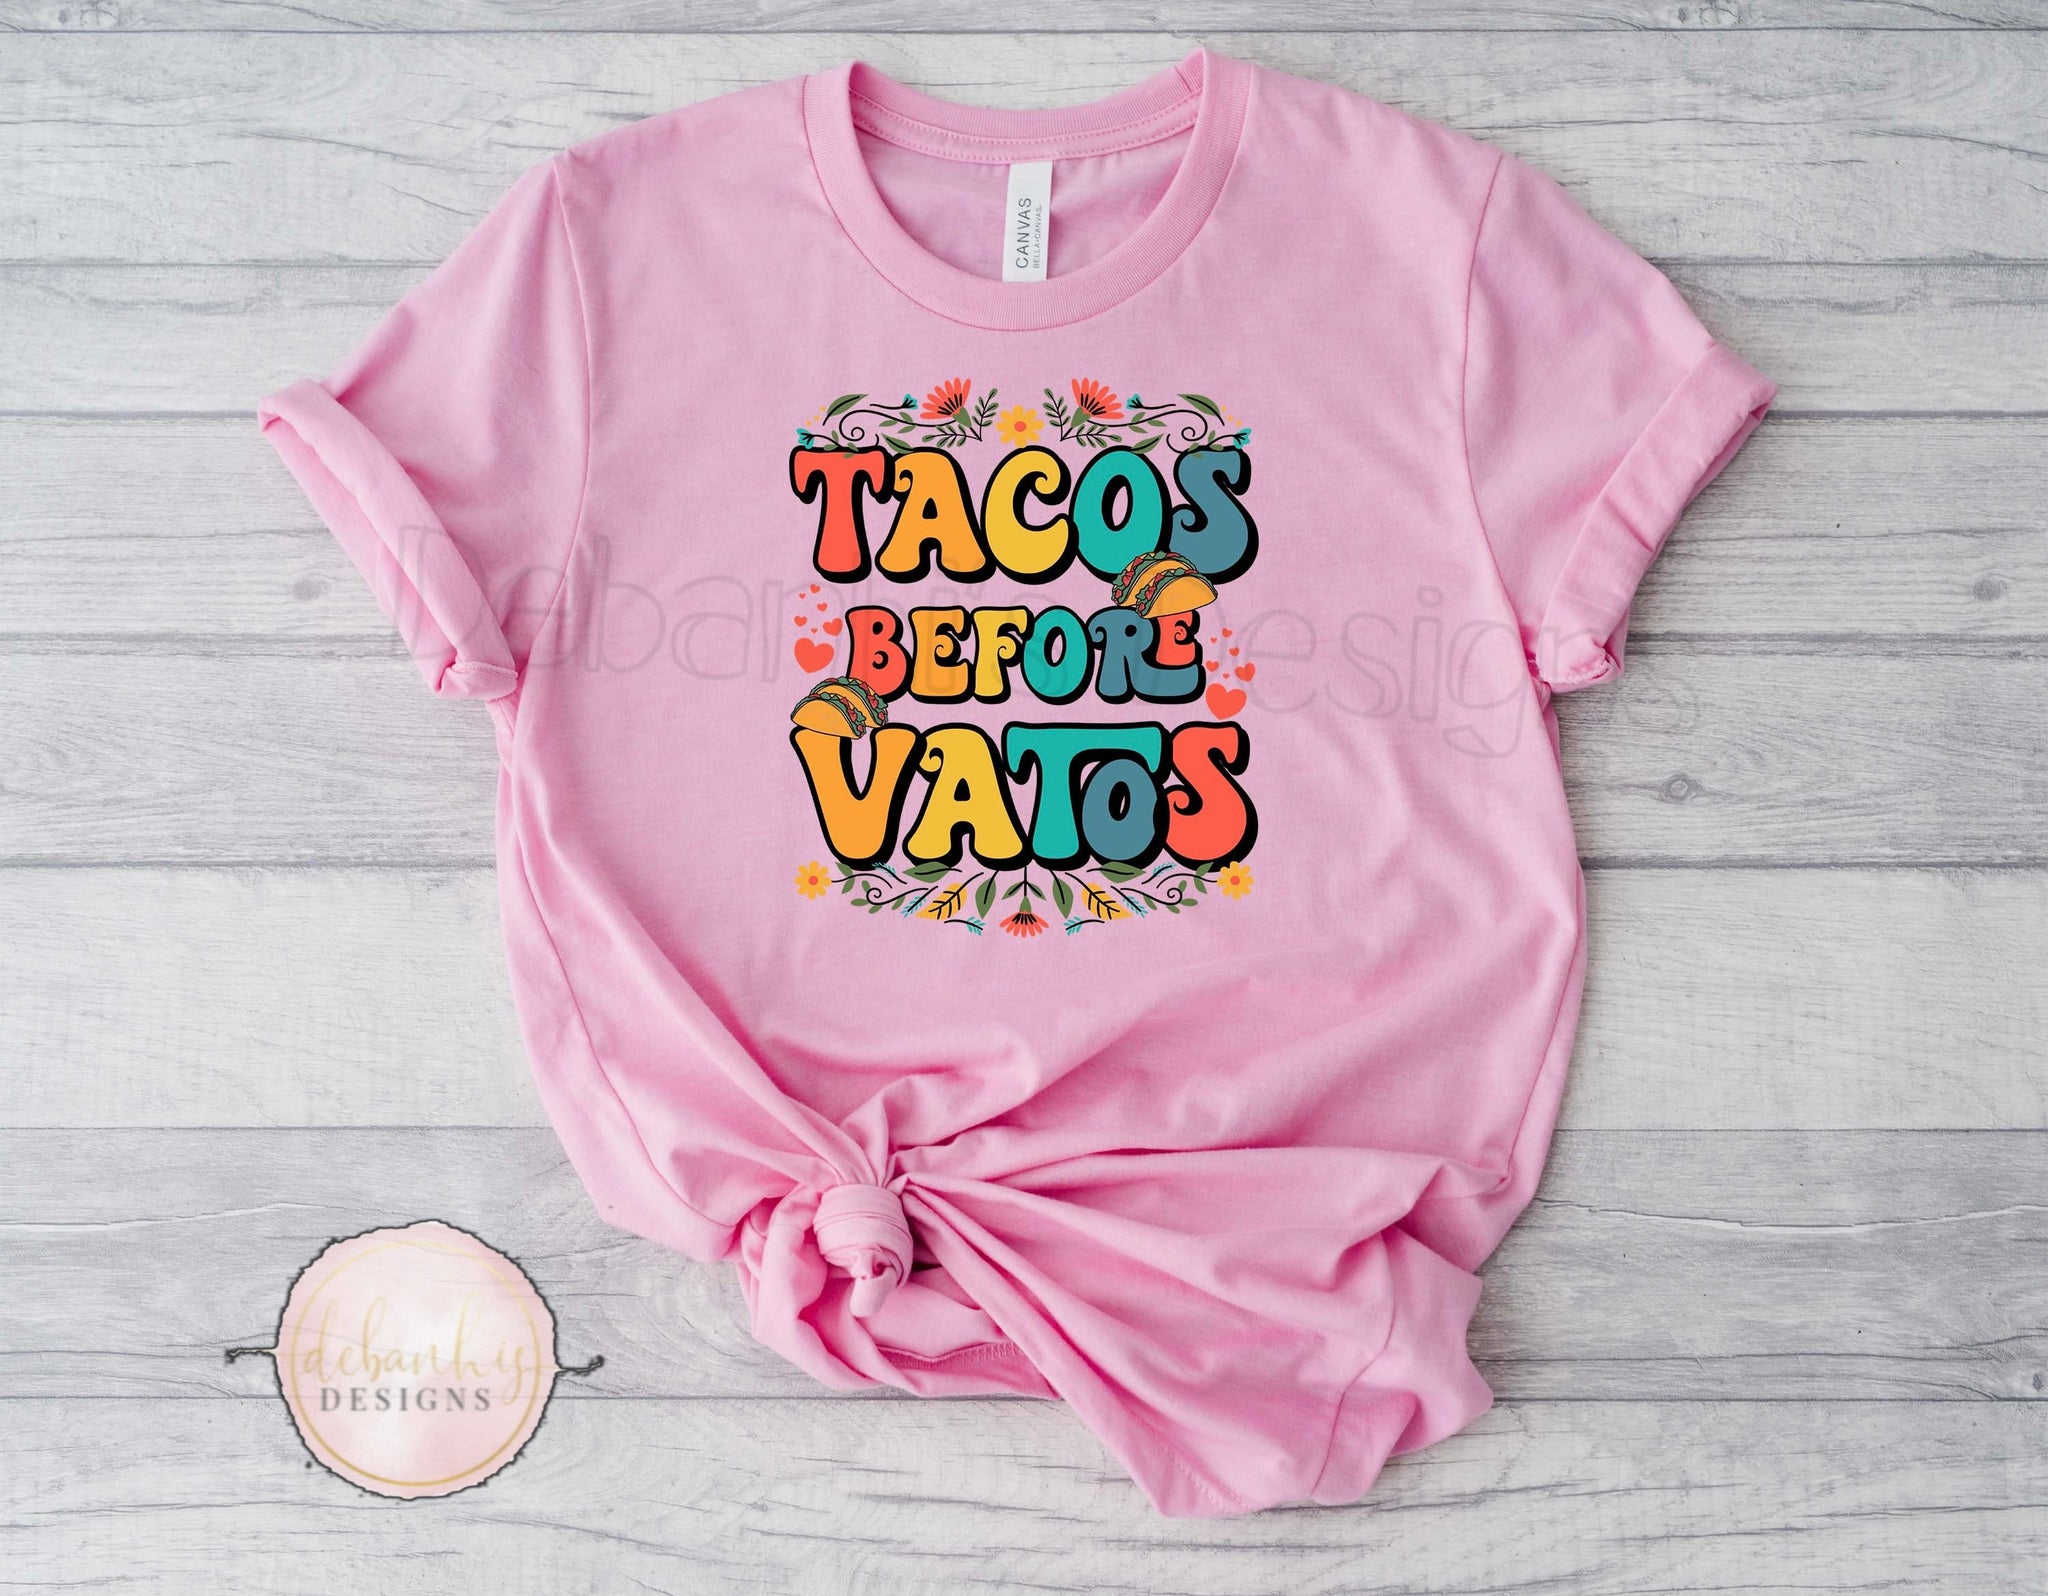 Tacos before vatos Tshirt